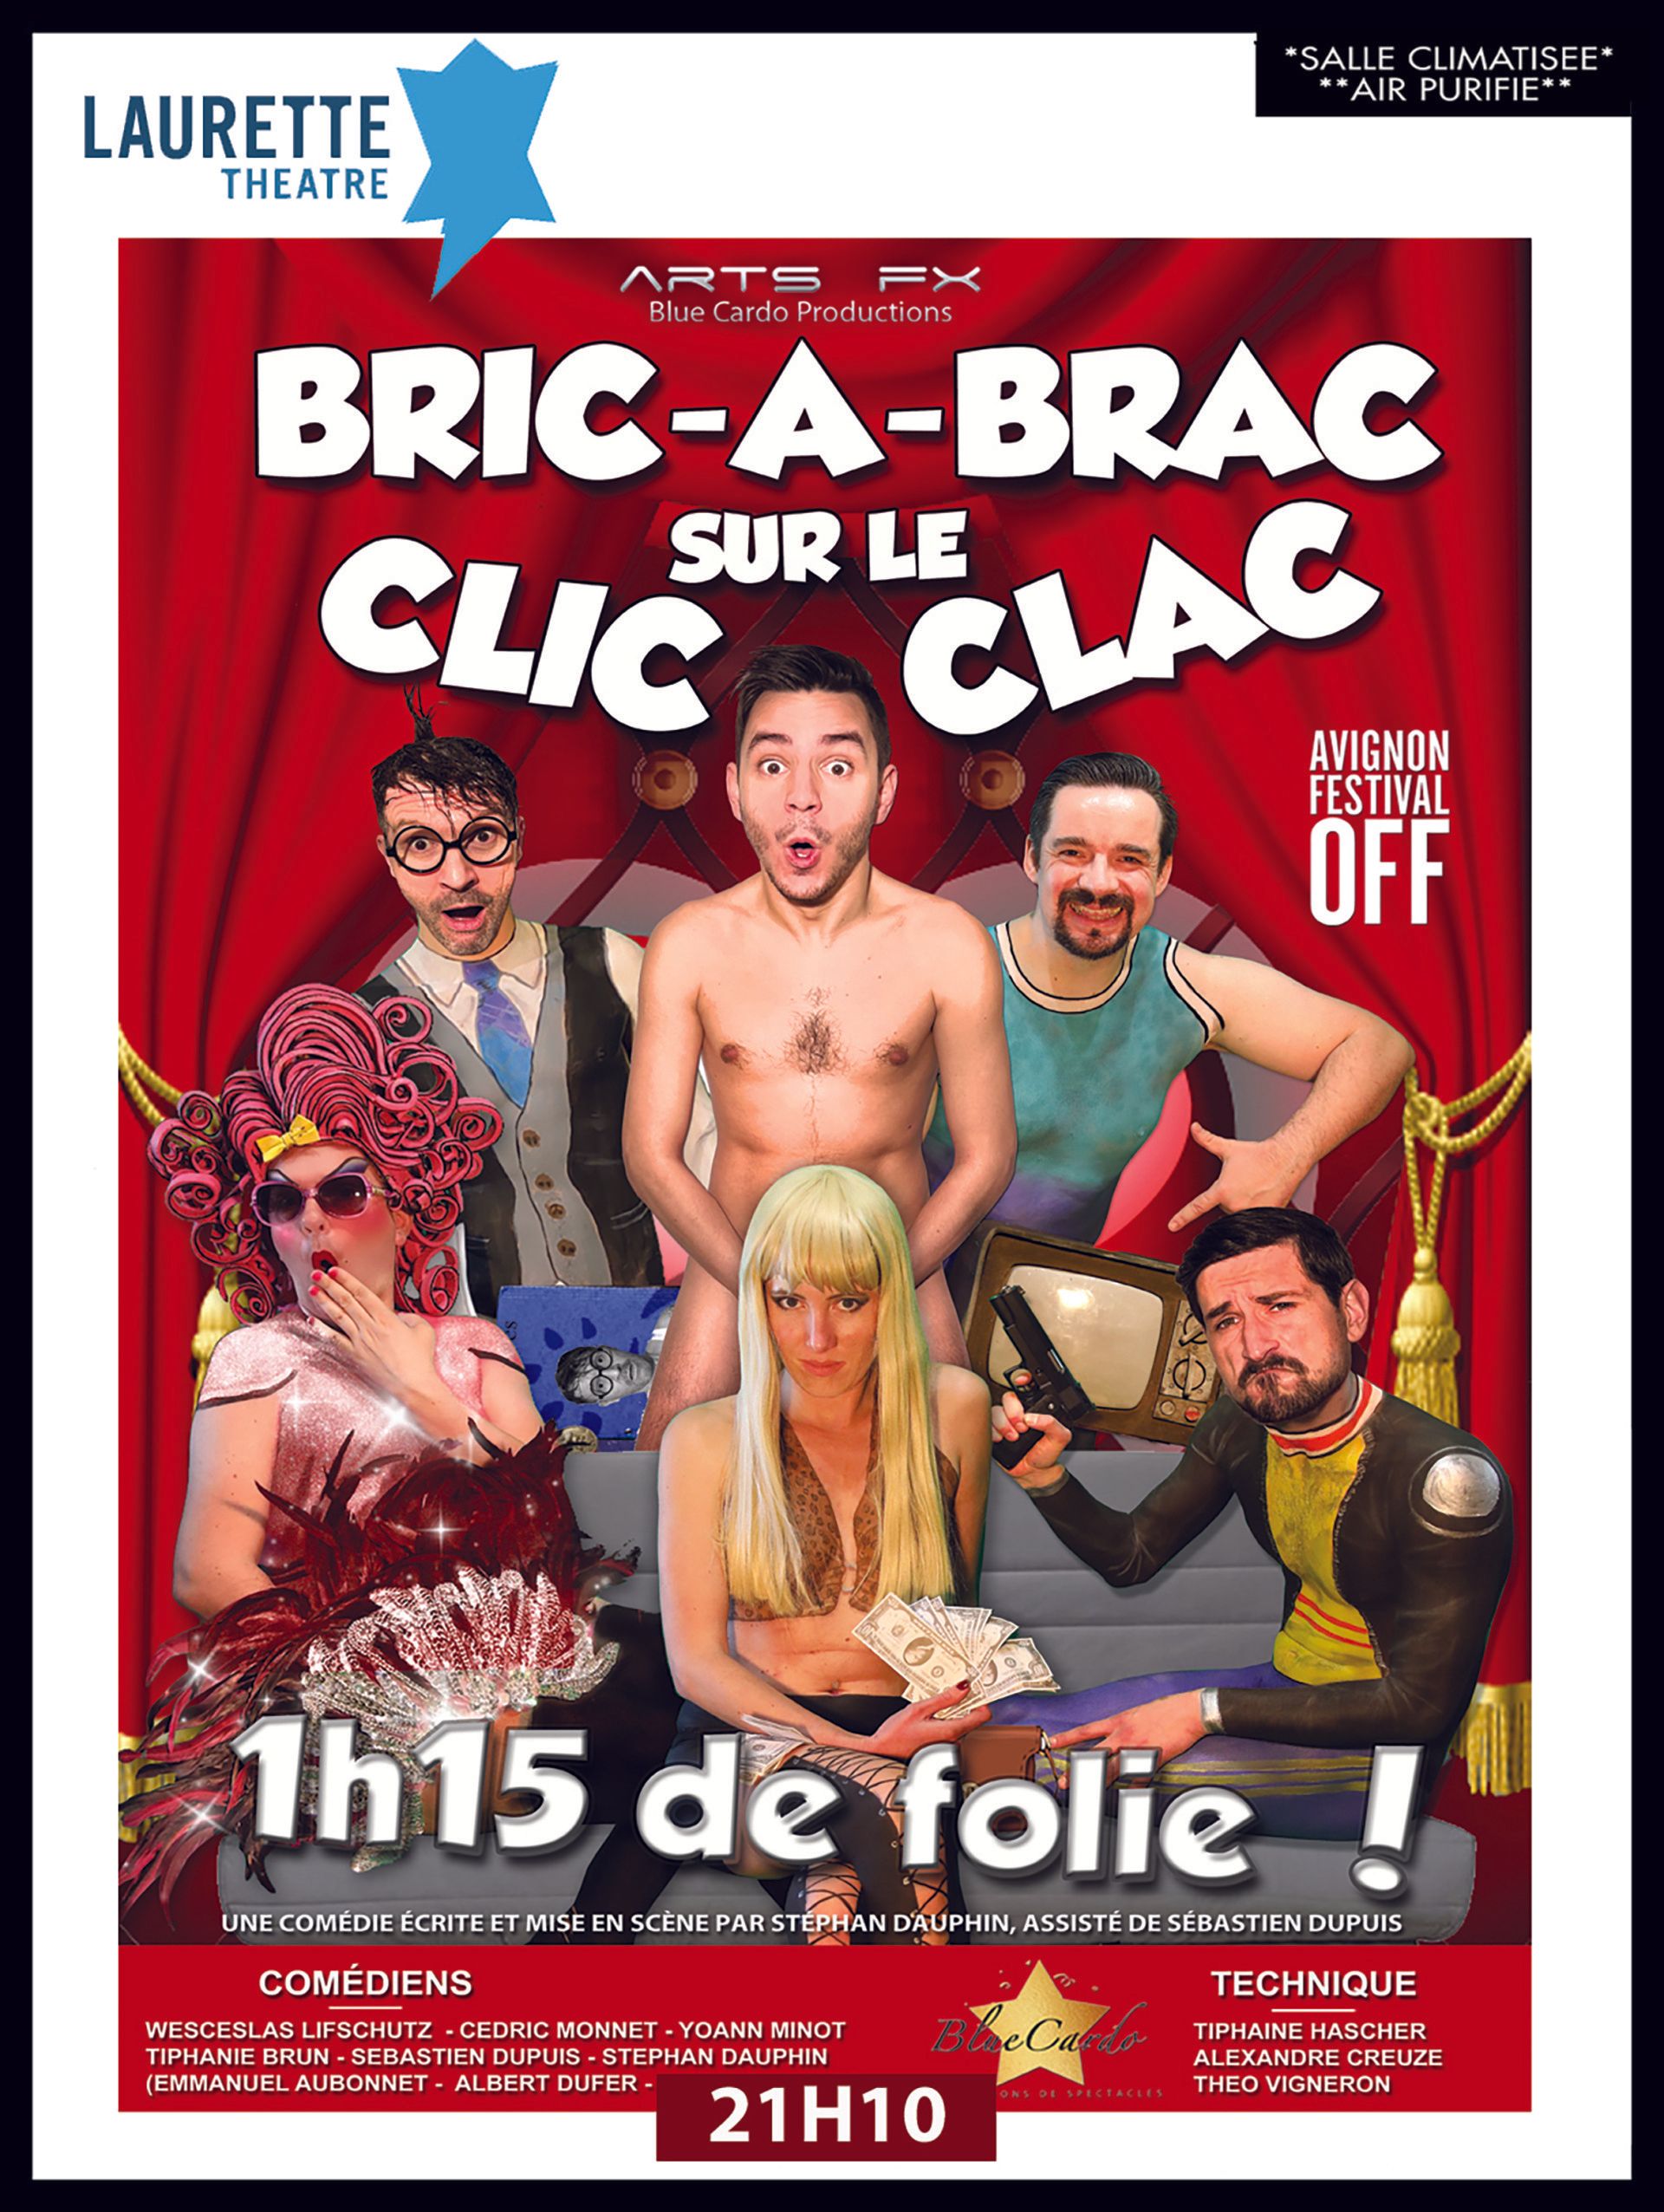 a movie poster for bric-a-brac sur le clic